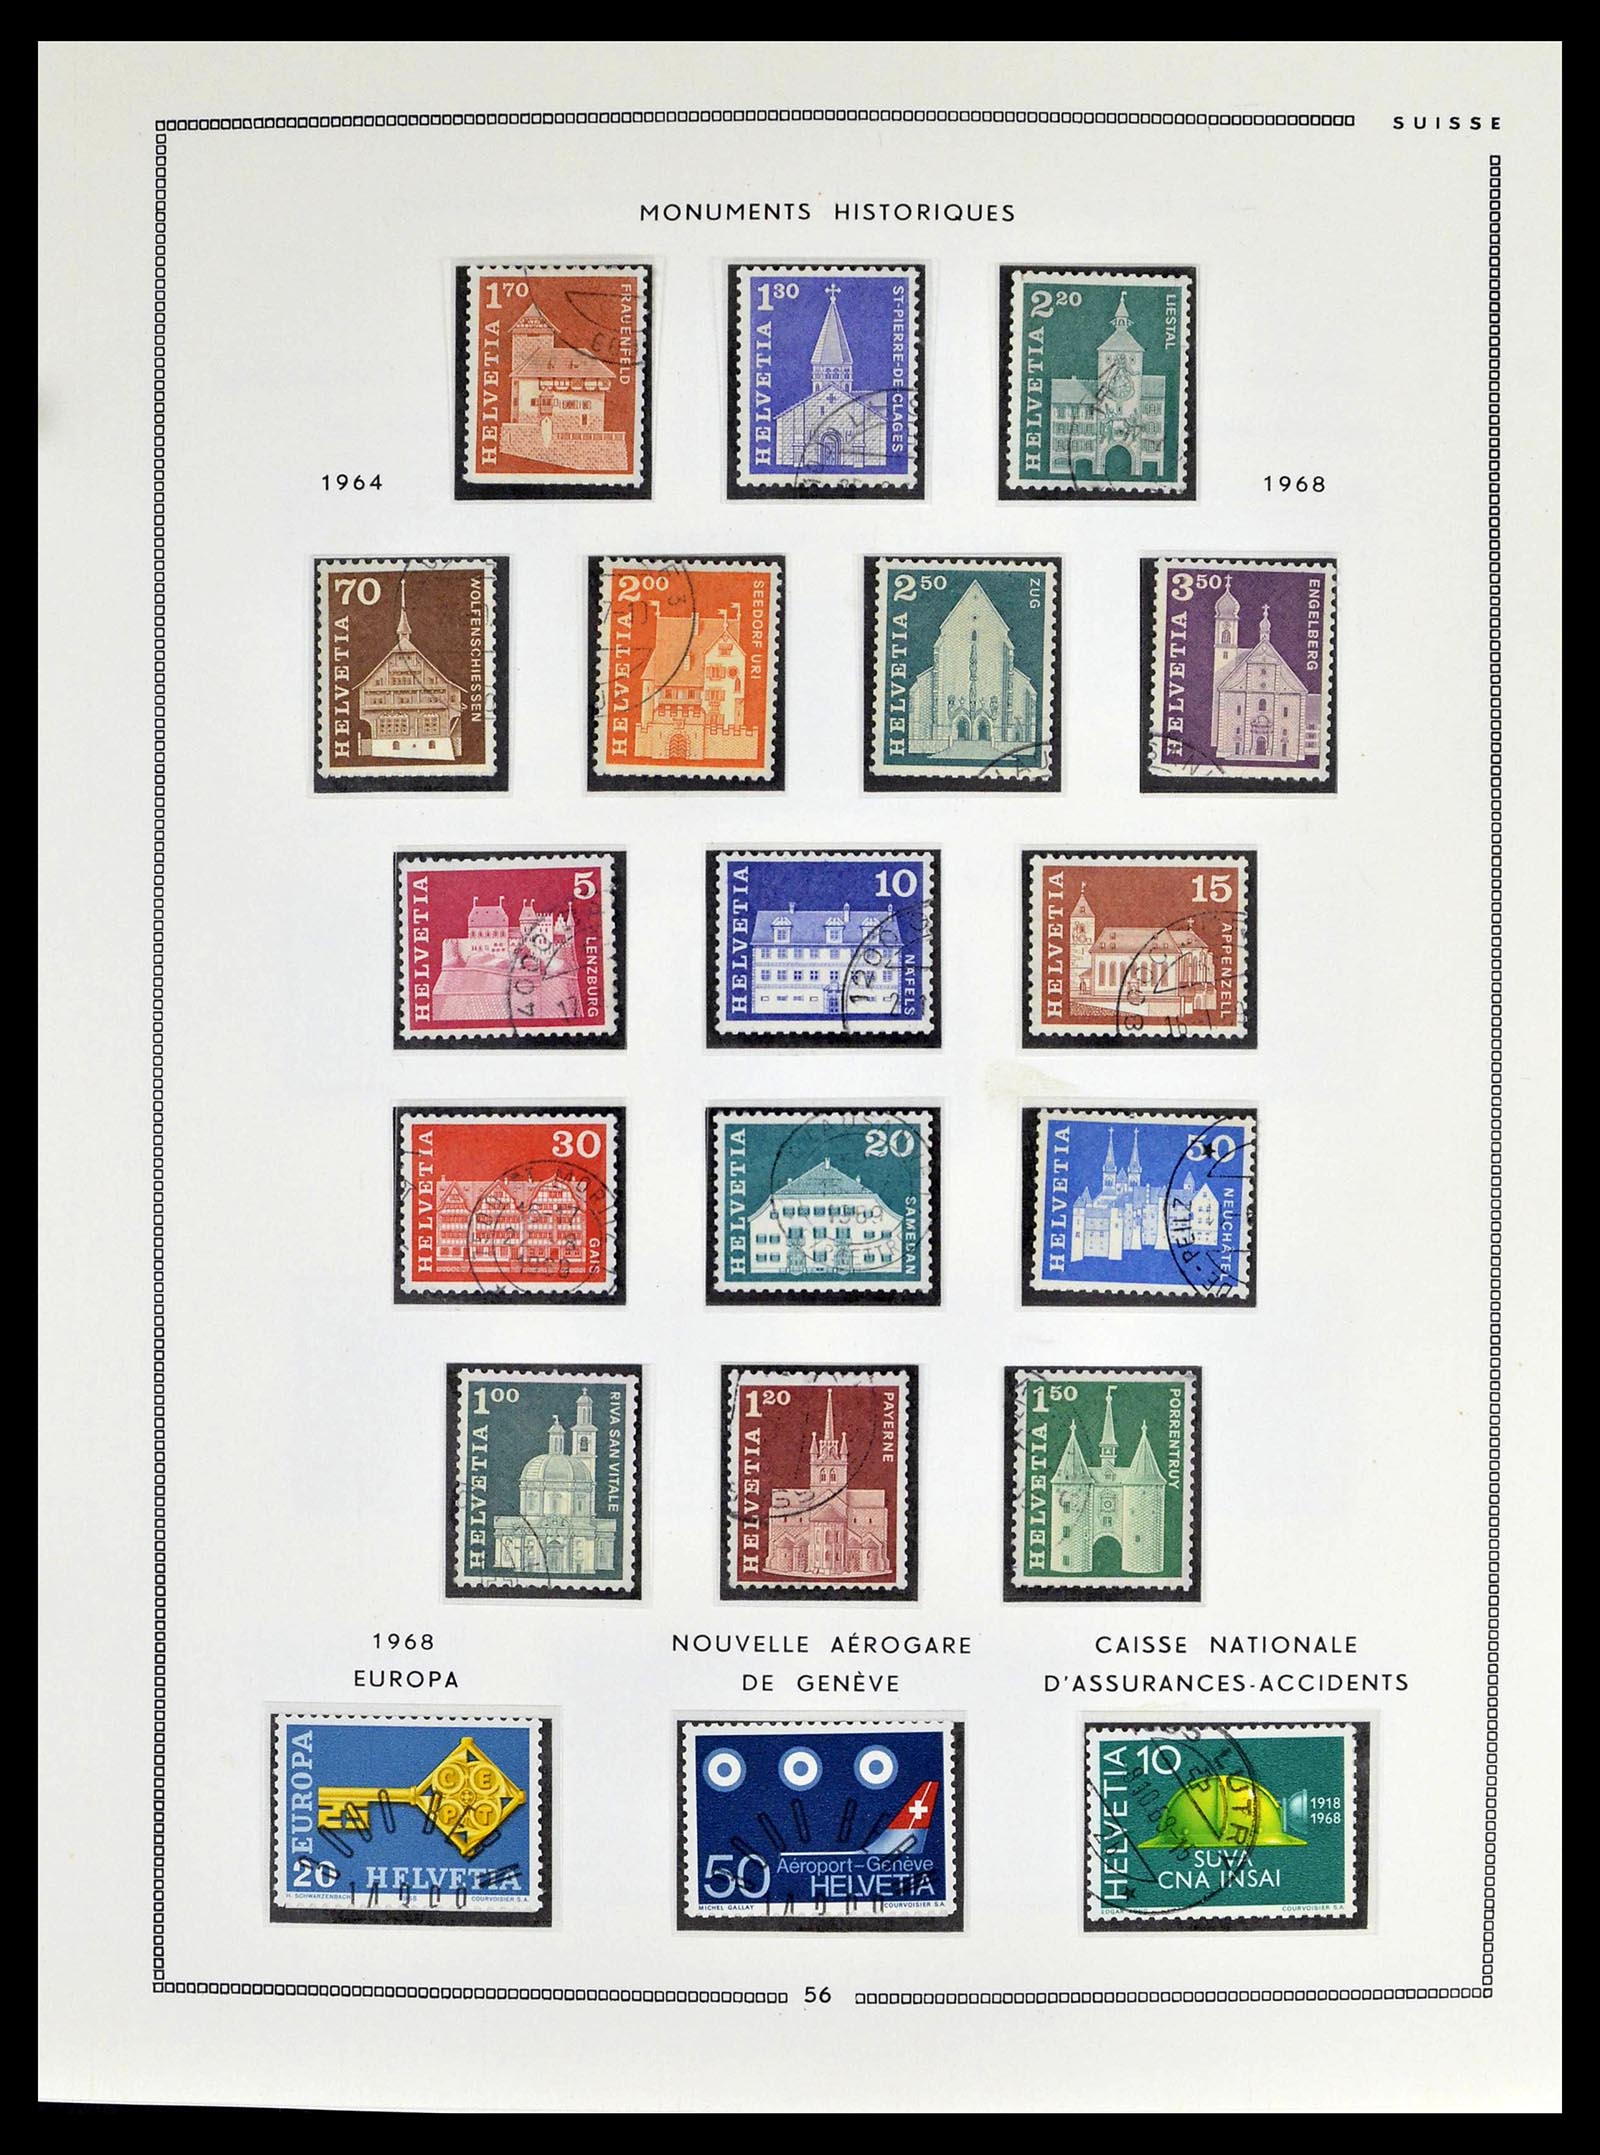 39094 0054 - Stamp collection 39094 Switzerland 1850-2005.